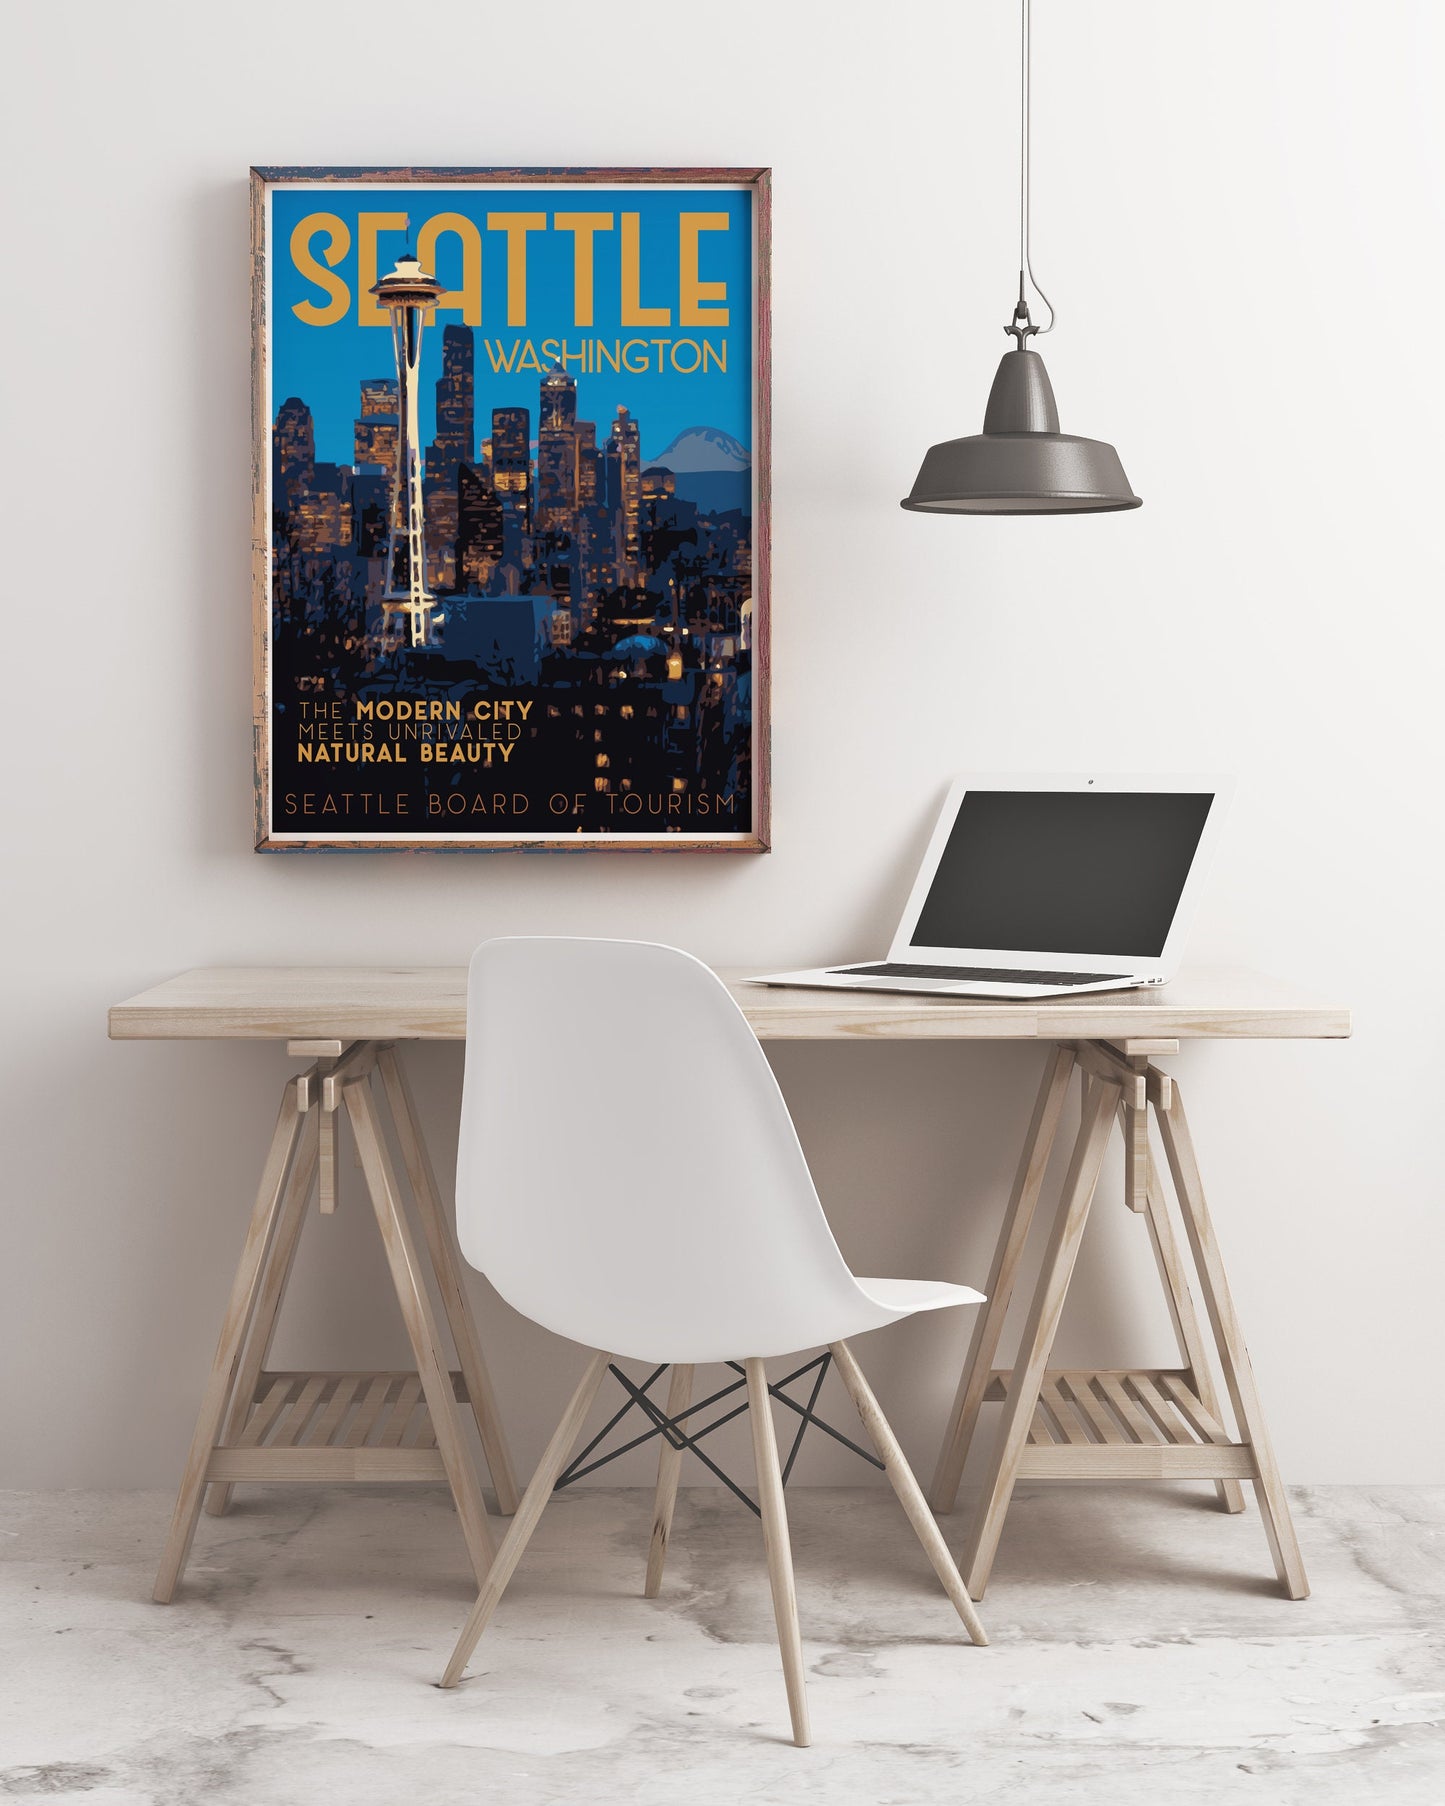 Seattle Washington Print, Seattle Washington Space Needle Poster, Vintage Style Travel Art